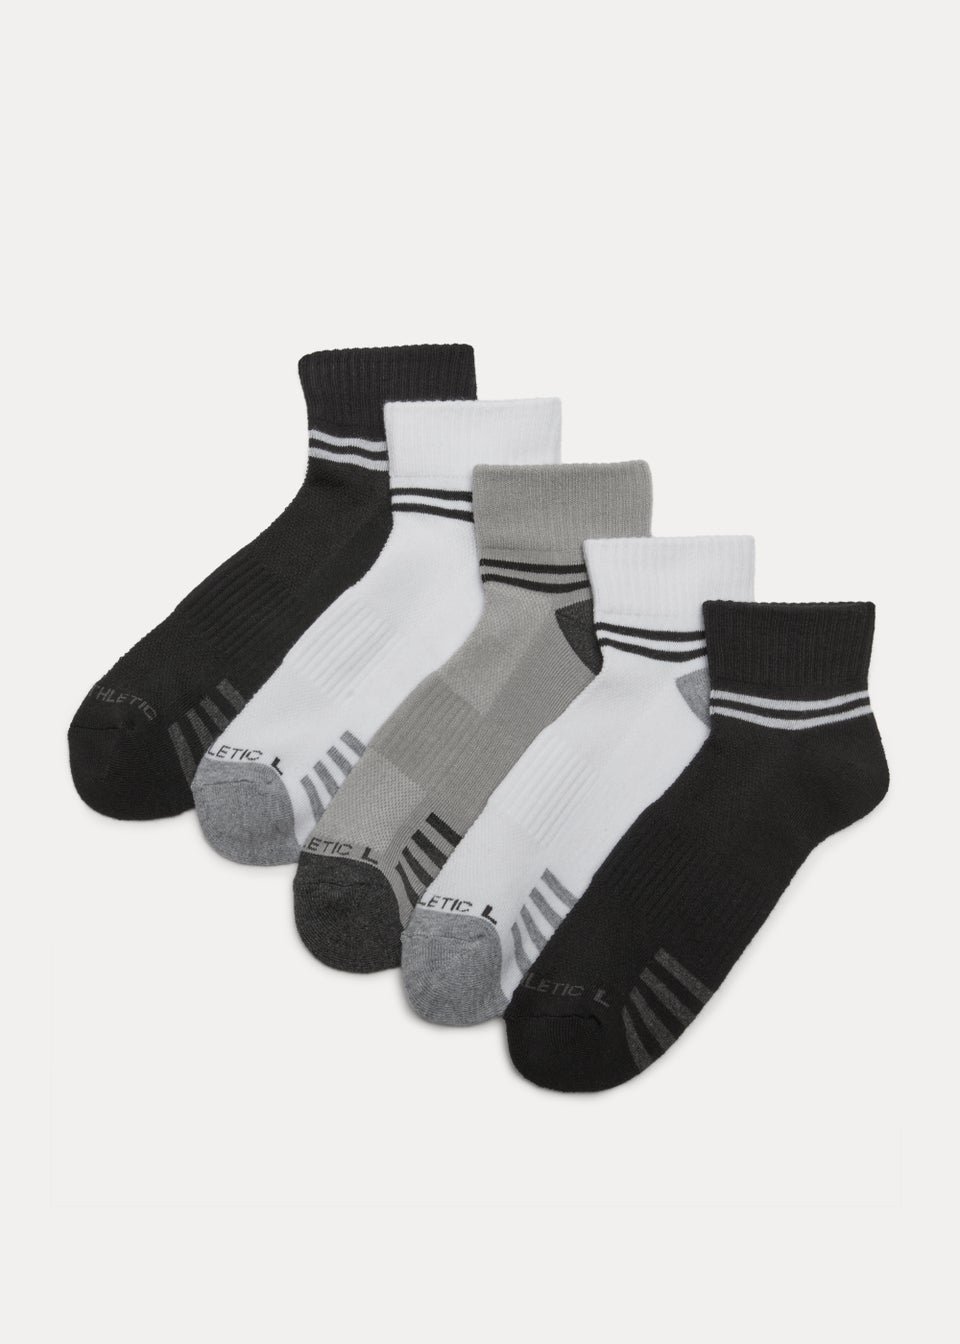 US Athletic 5 Pack Multicoloured Quarter Sports Socks